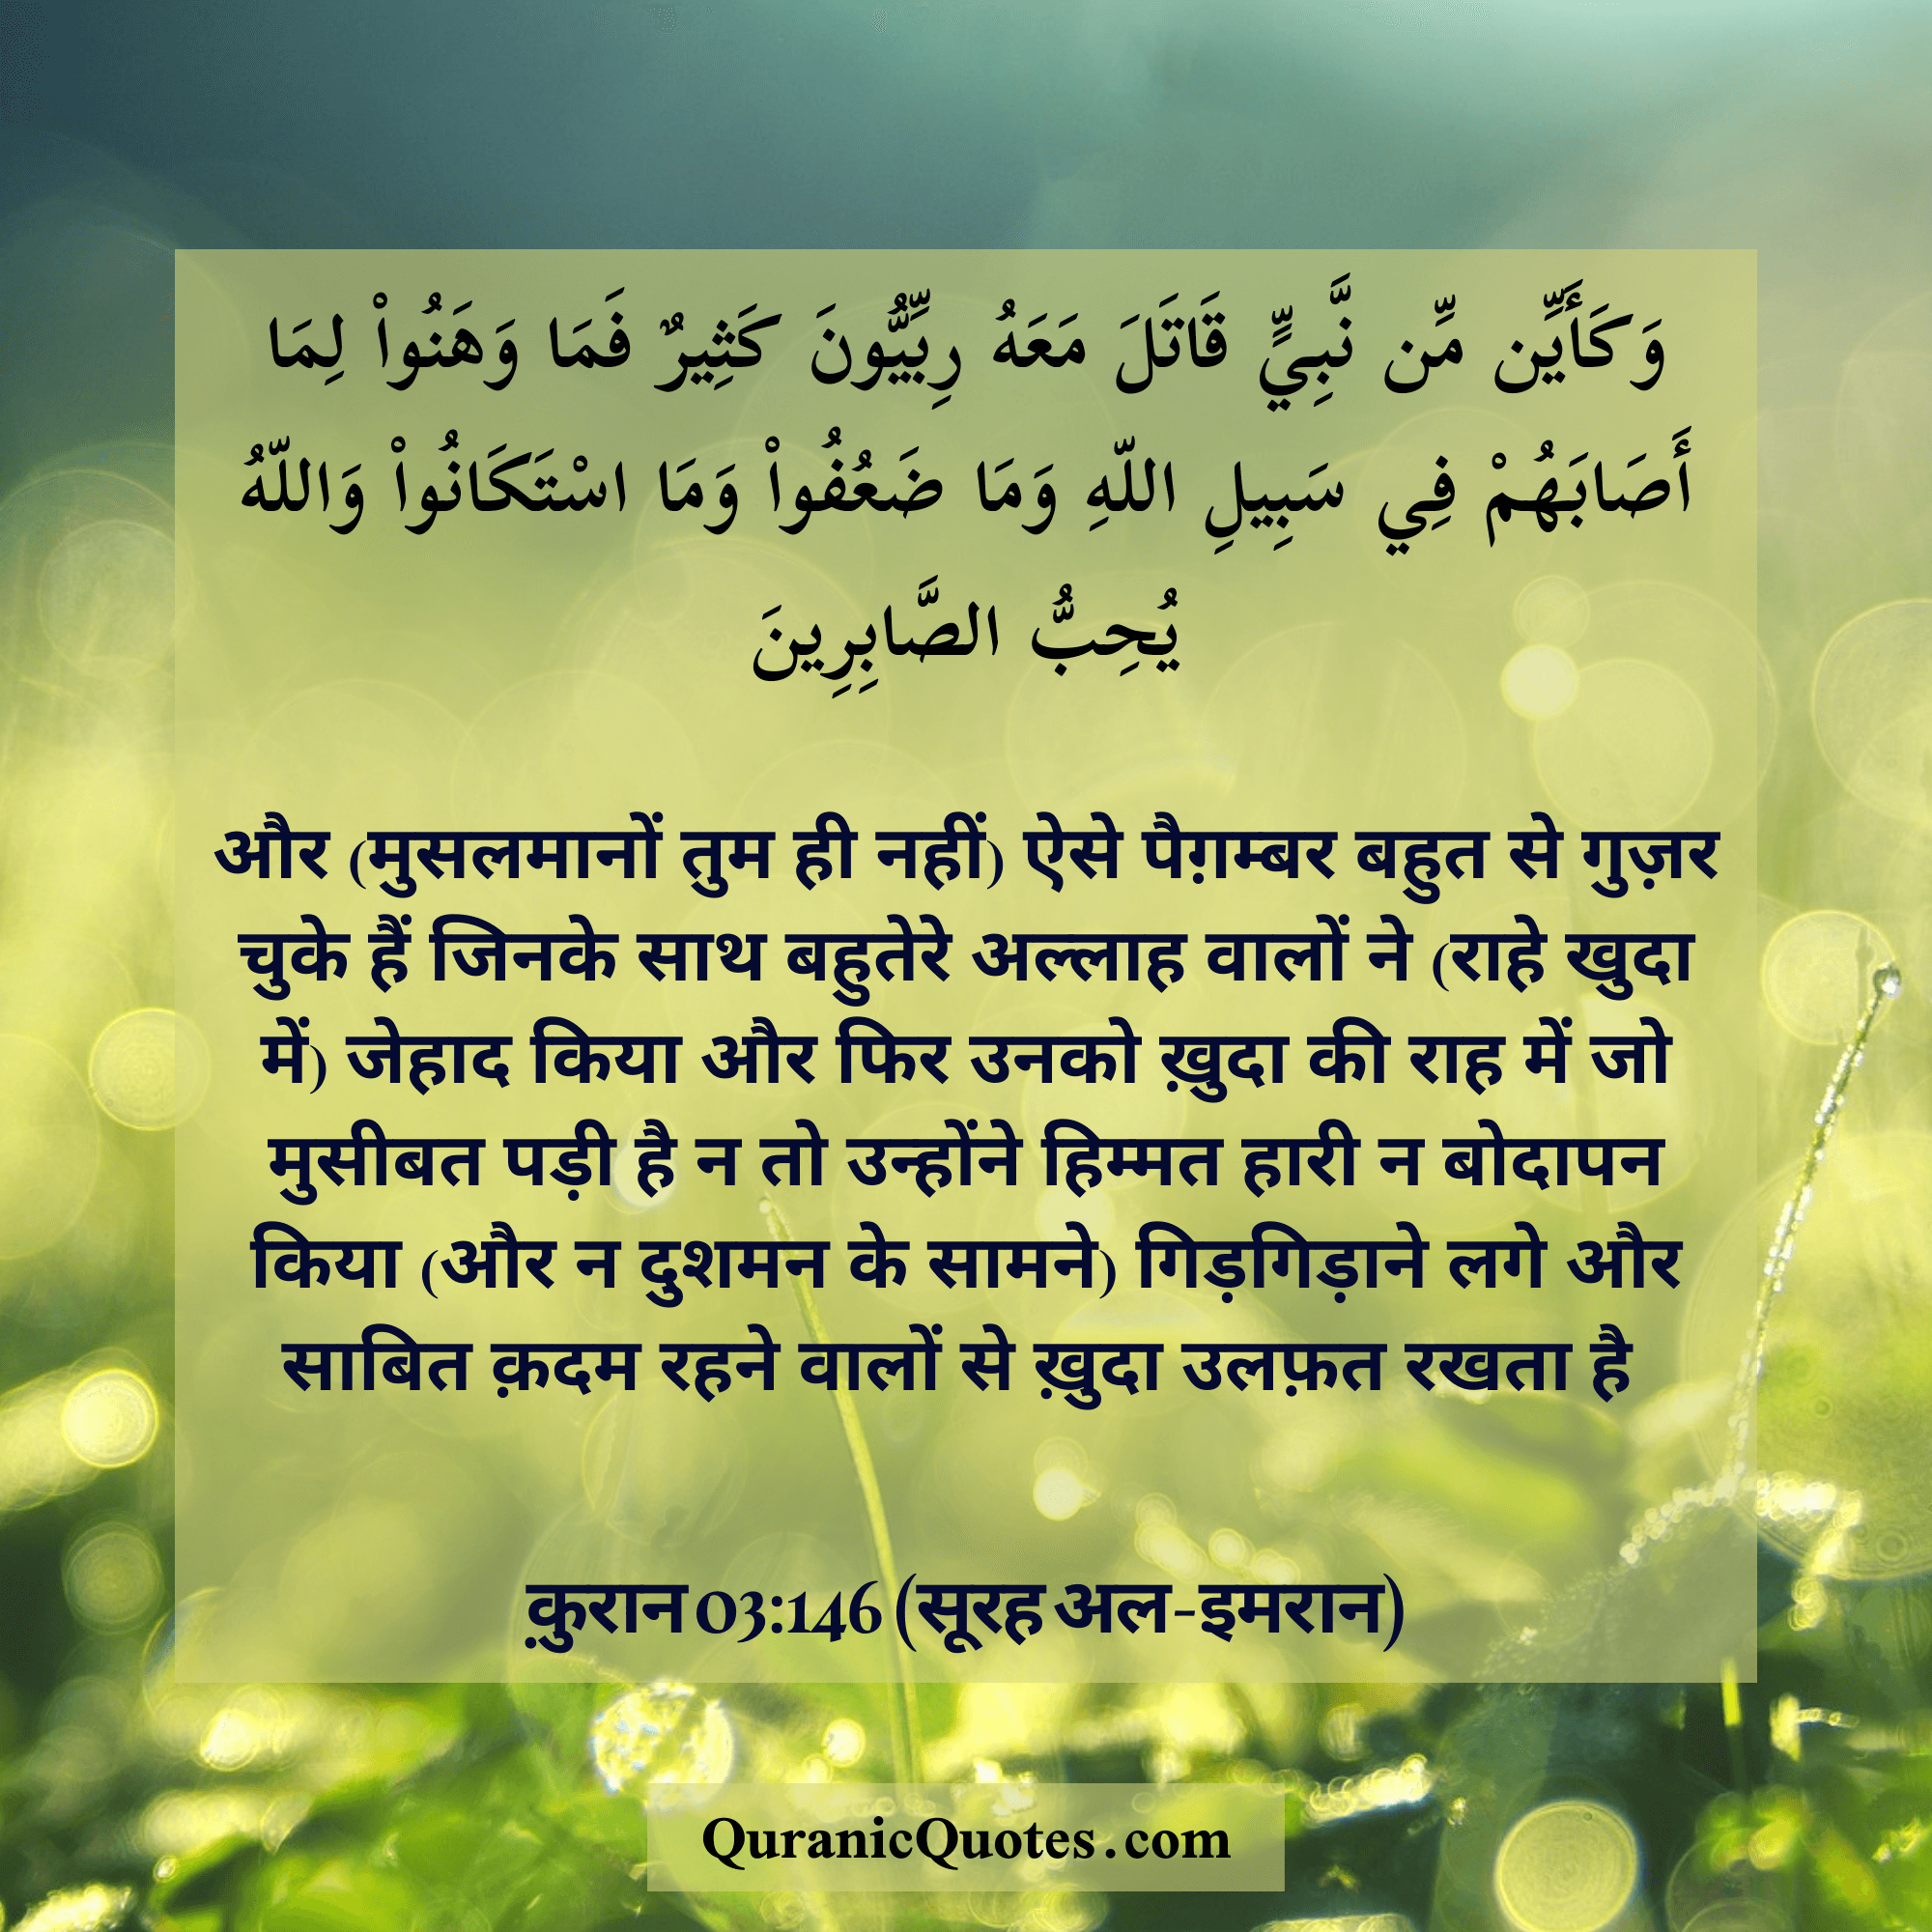 Quranic Quotes in Hindi 350